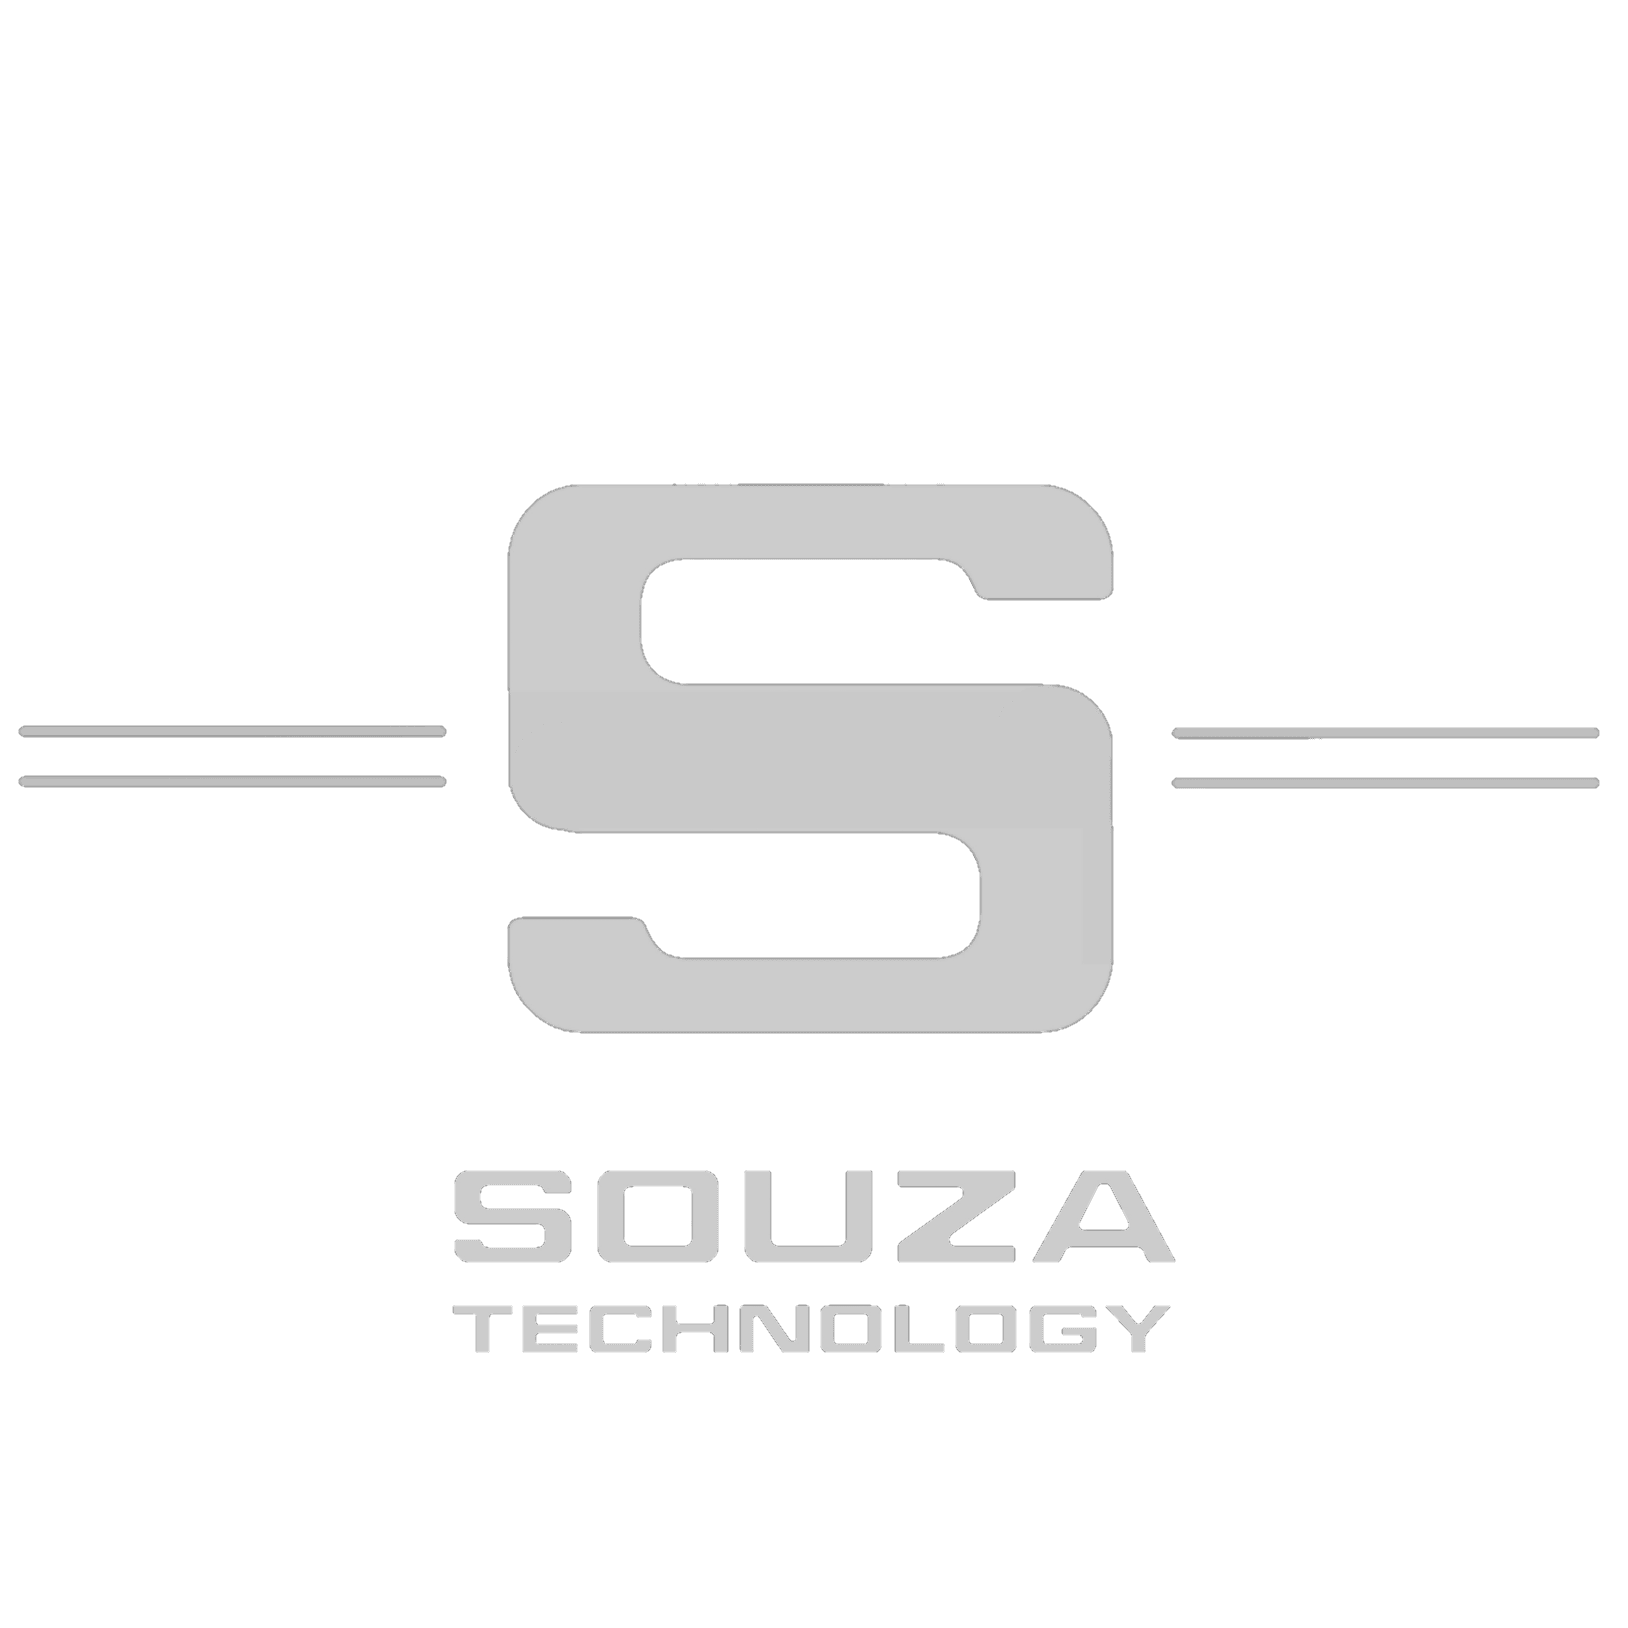 Souza Technology